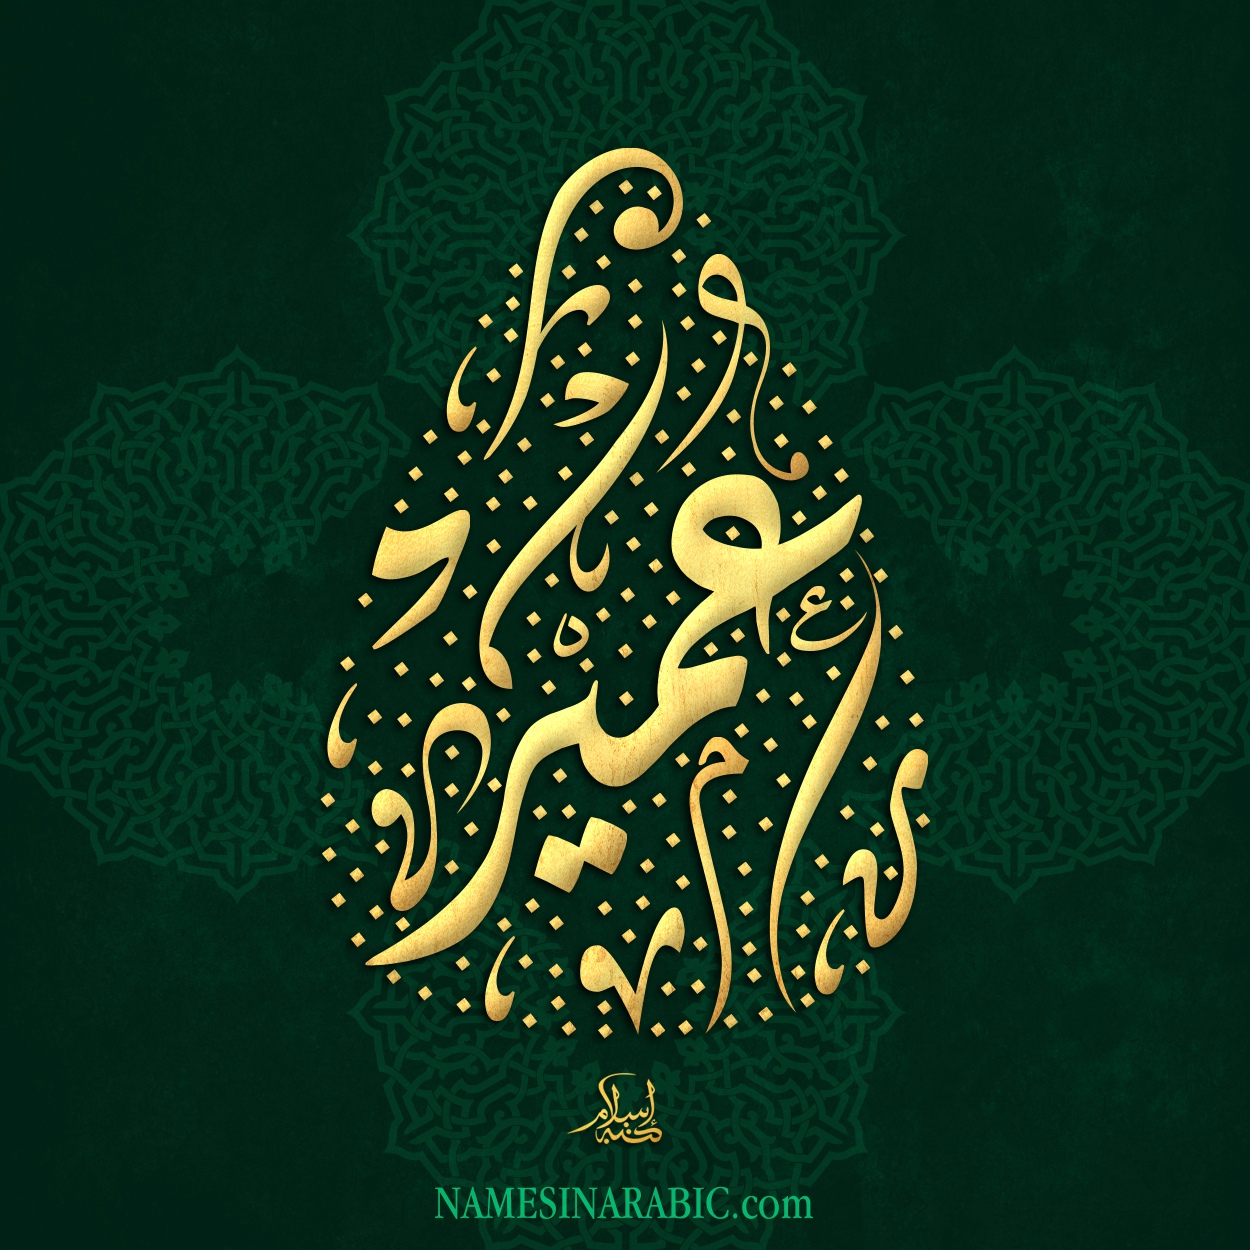 Umair-Name-in-Arabic-Diwani-Calligraphy.jpg